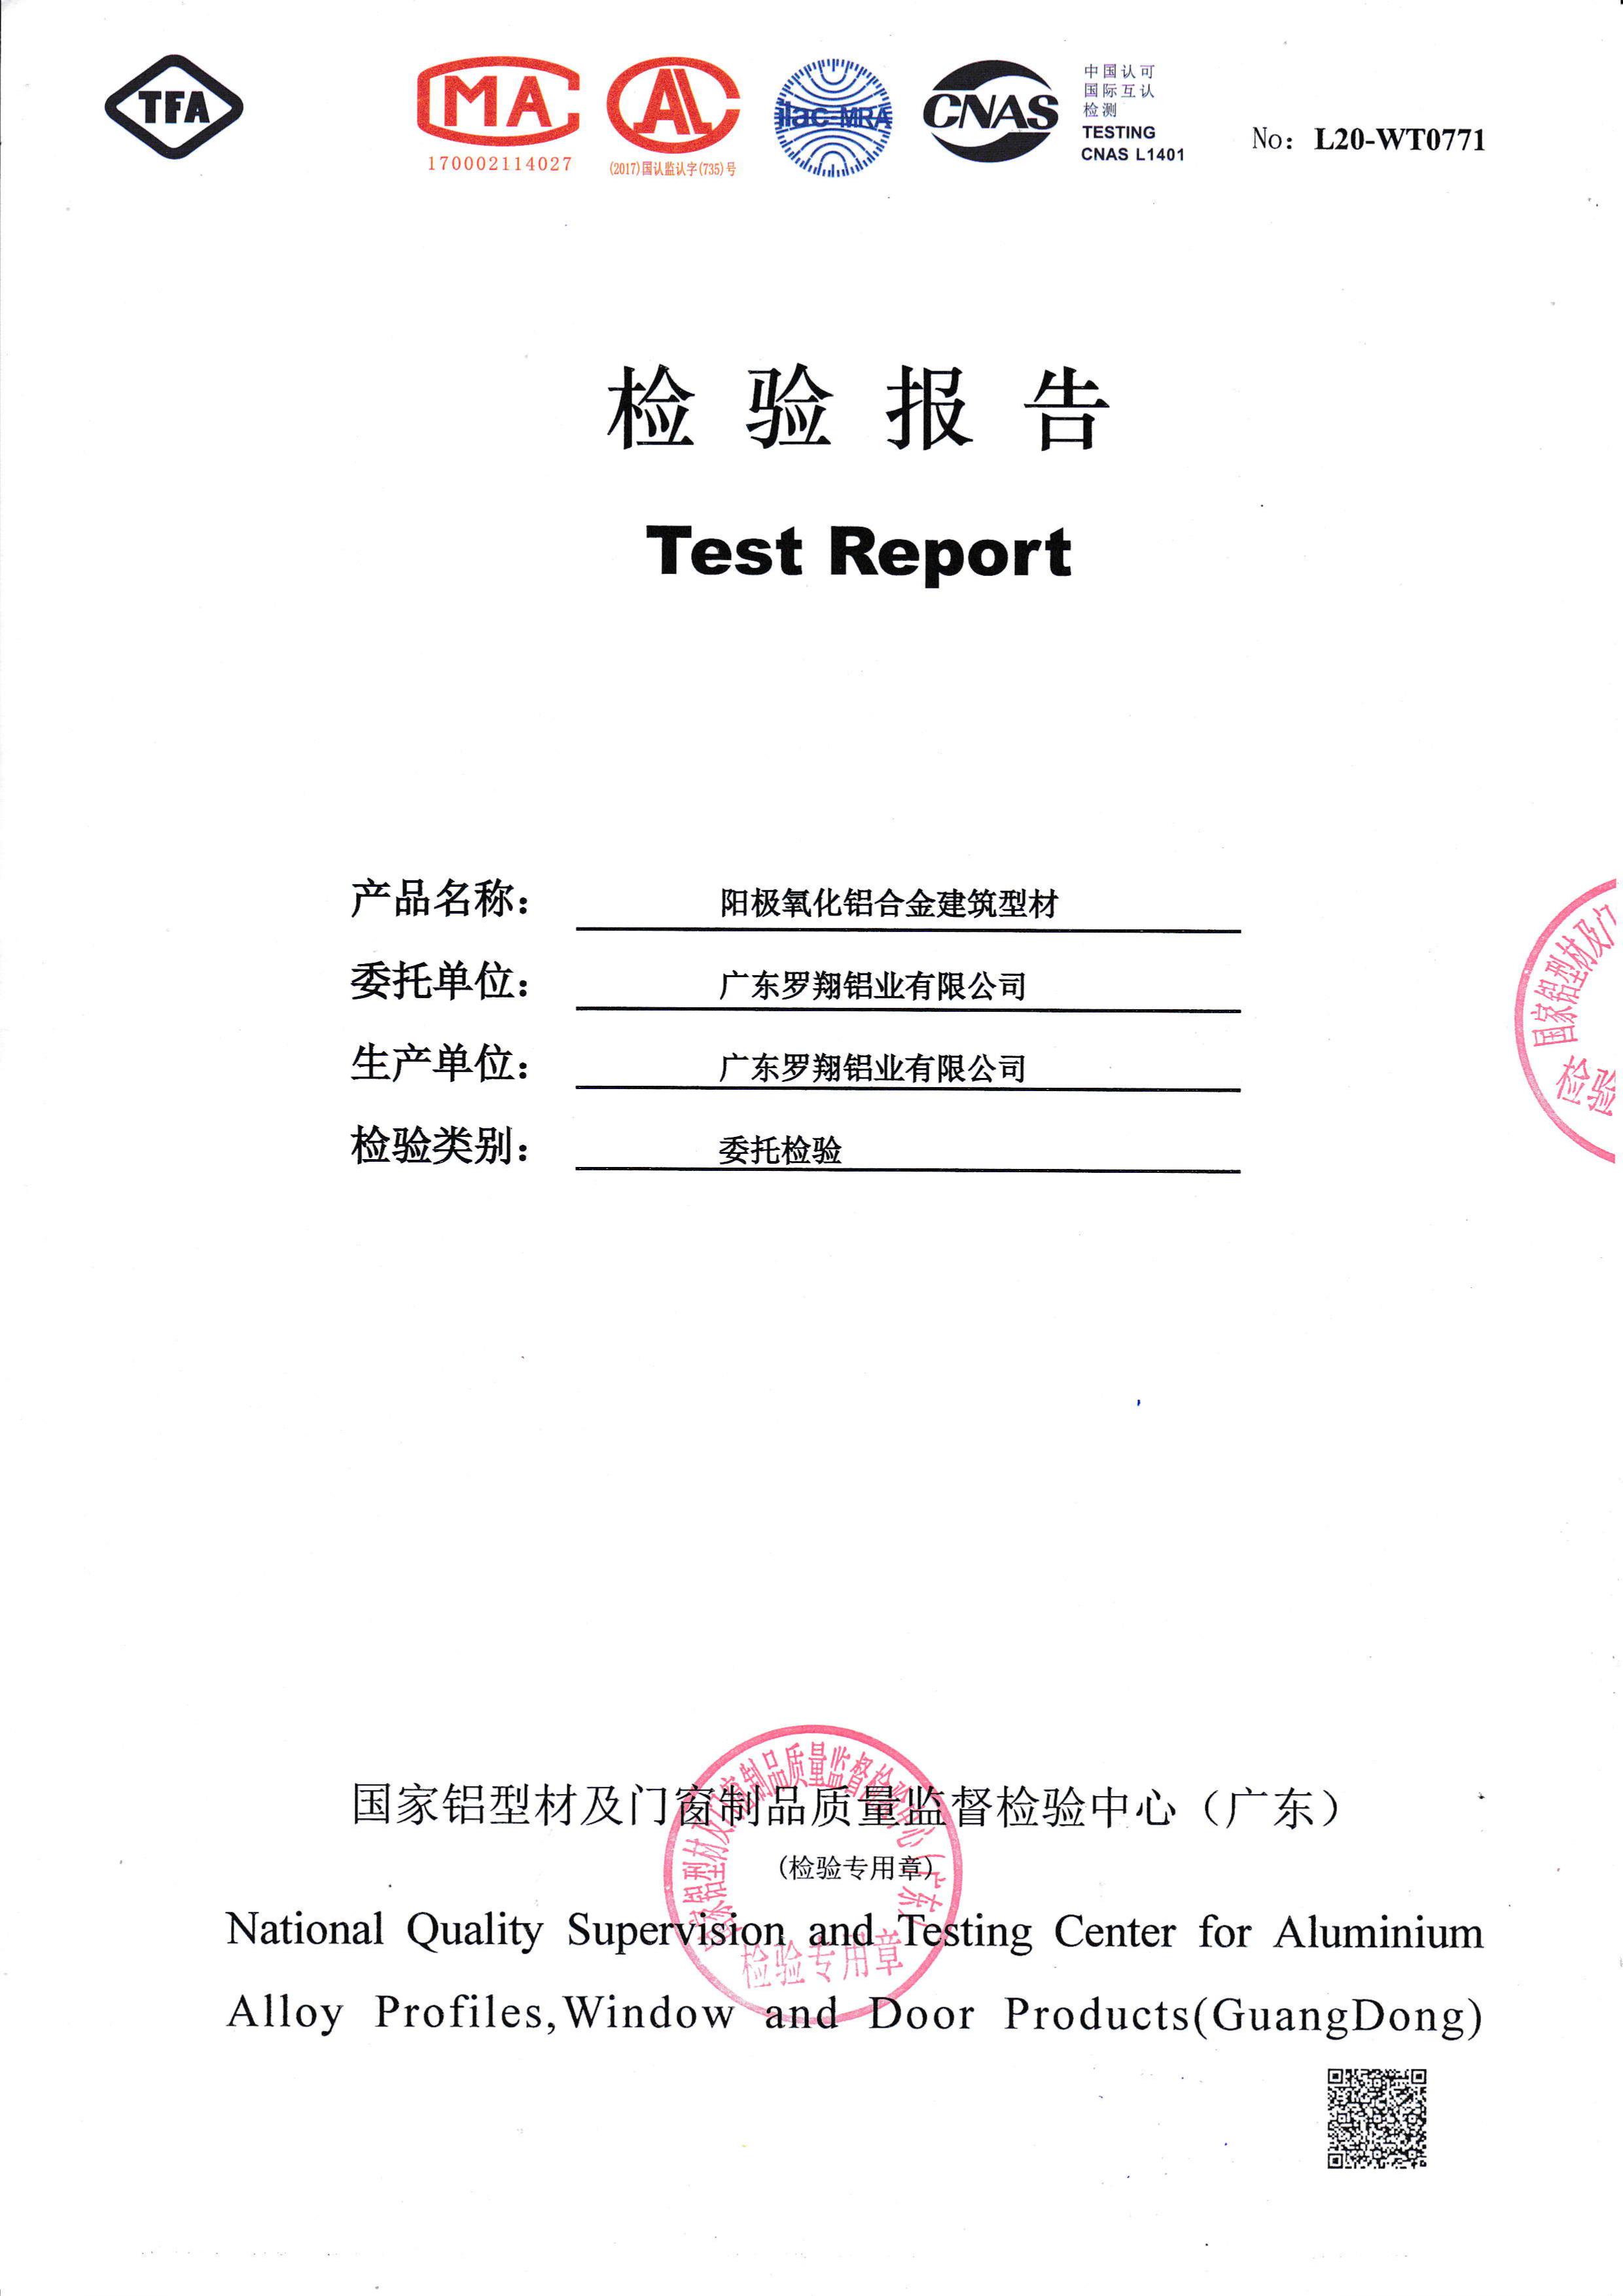 Anodic oxidation test report (1)